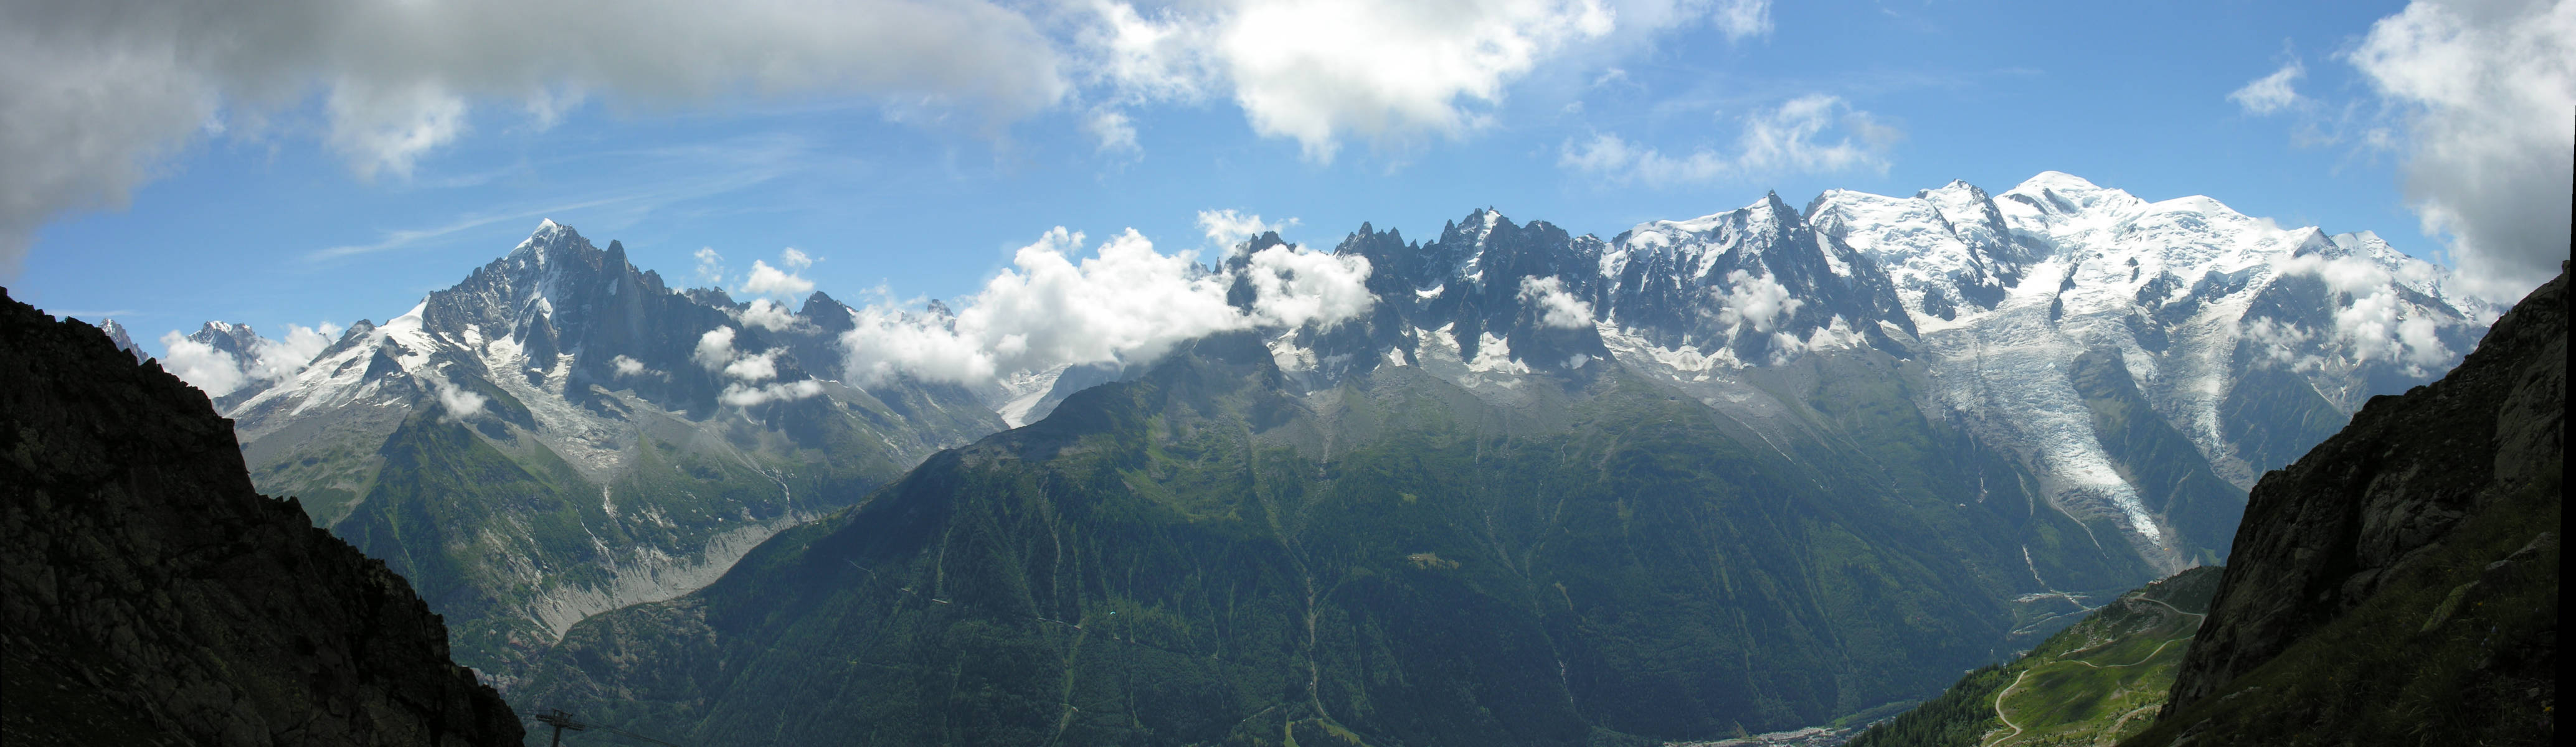 Mont Blanc - France3.jpg